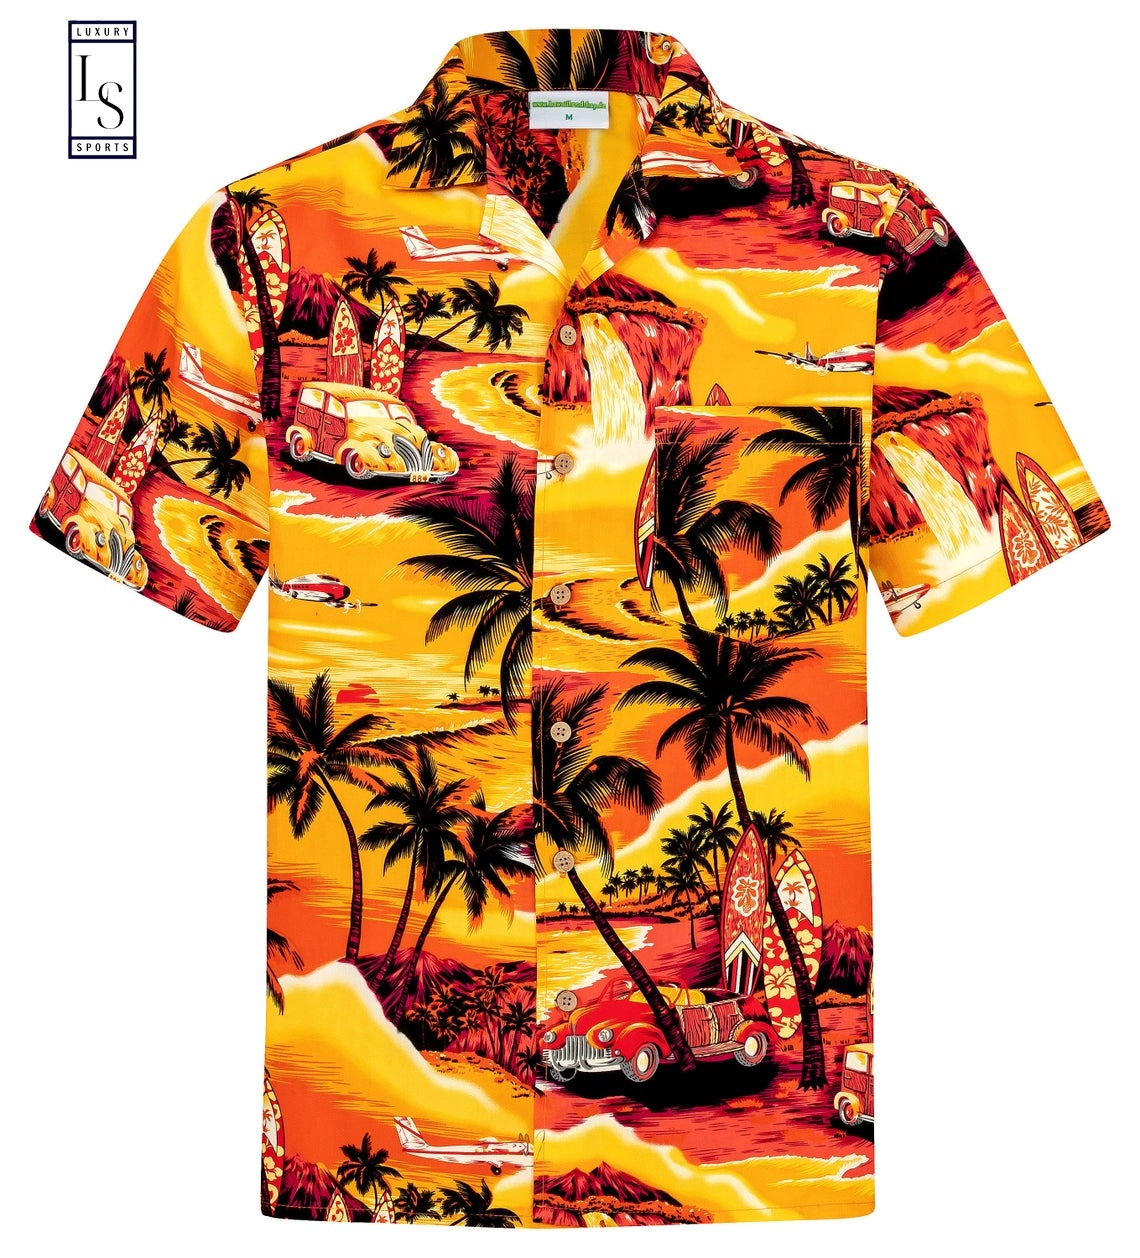 Peaceful Beach in Hawaiian Shirt